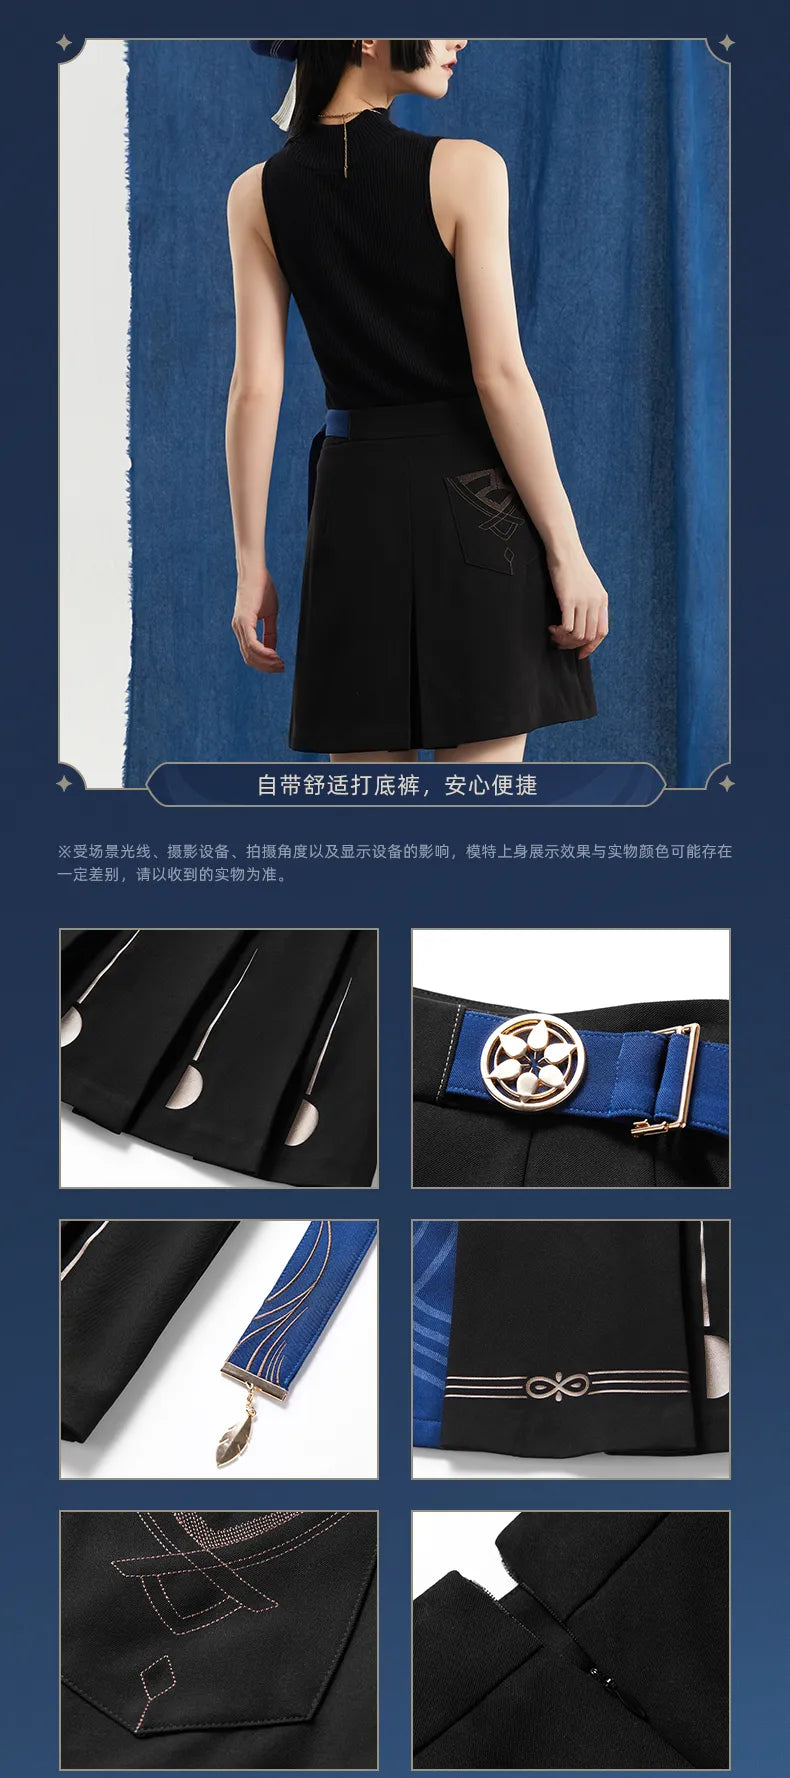 (Pre-Order) Genshin Impact - Wanderer Impression Clothing - Skirt